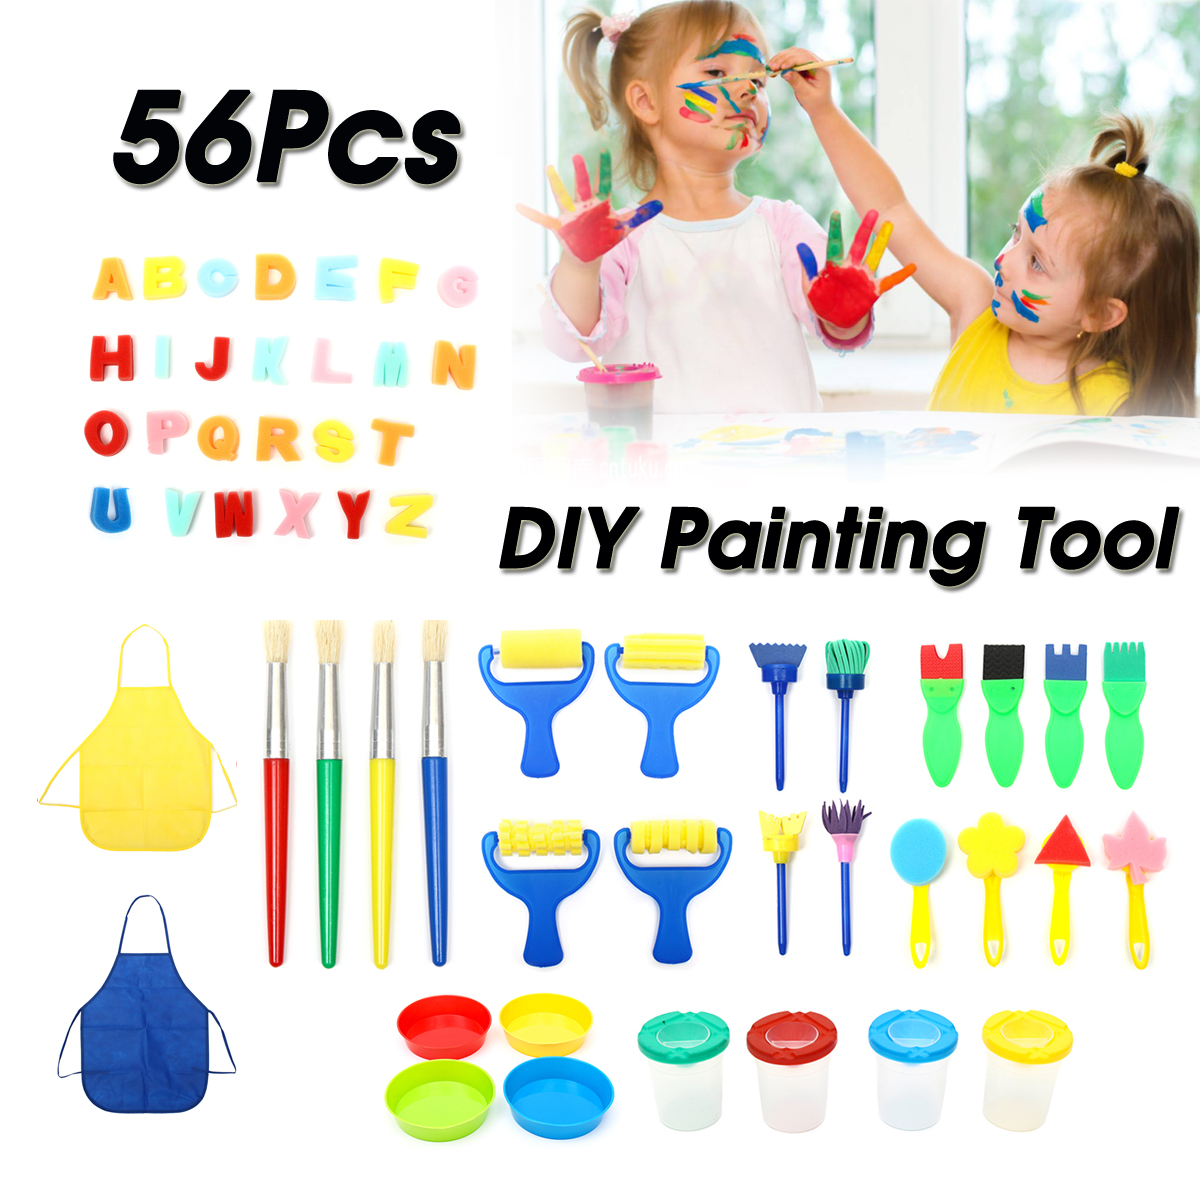 56Pcs-DIY-Child-Painting-Tool-Kit-Roller-Mold-Sponge-Educational-Drawing-Toys-Gift-1611442-2